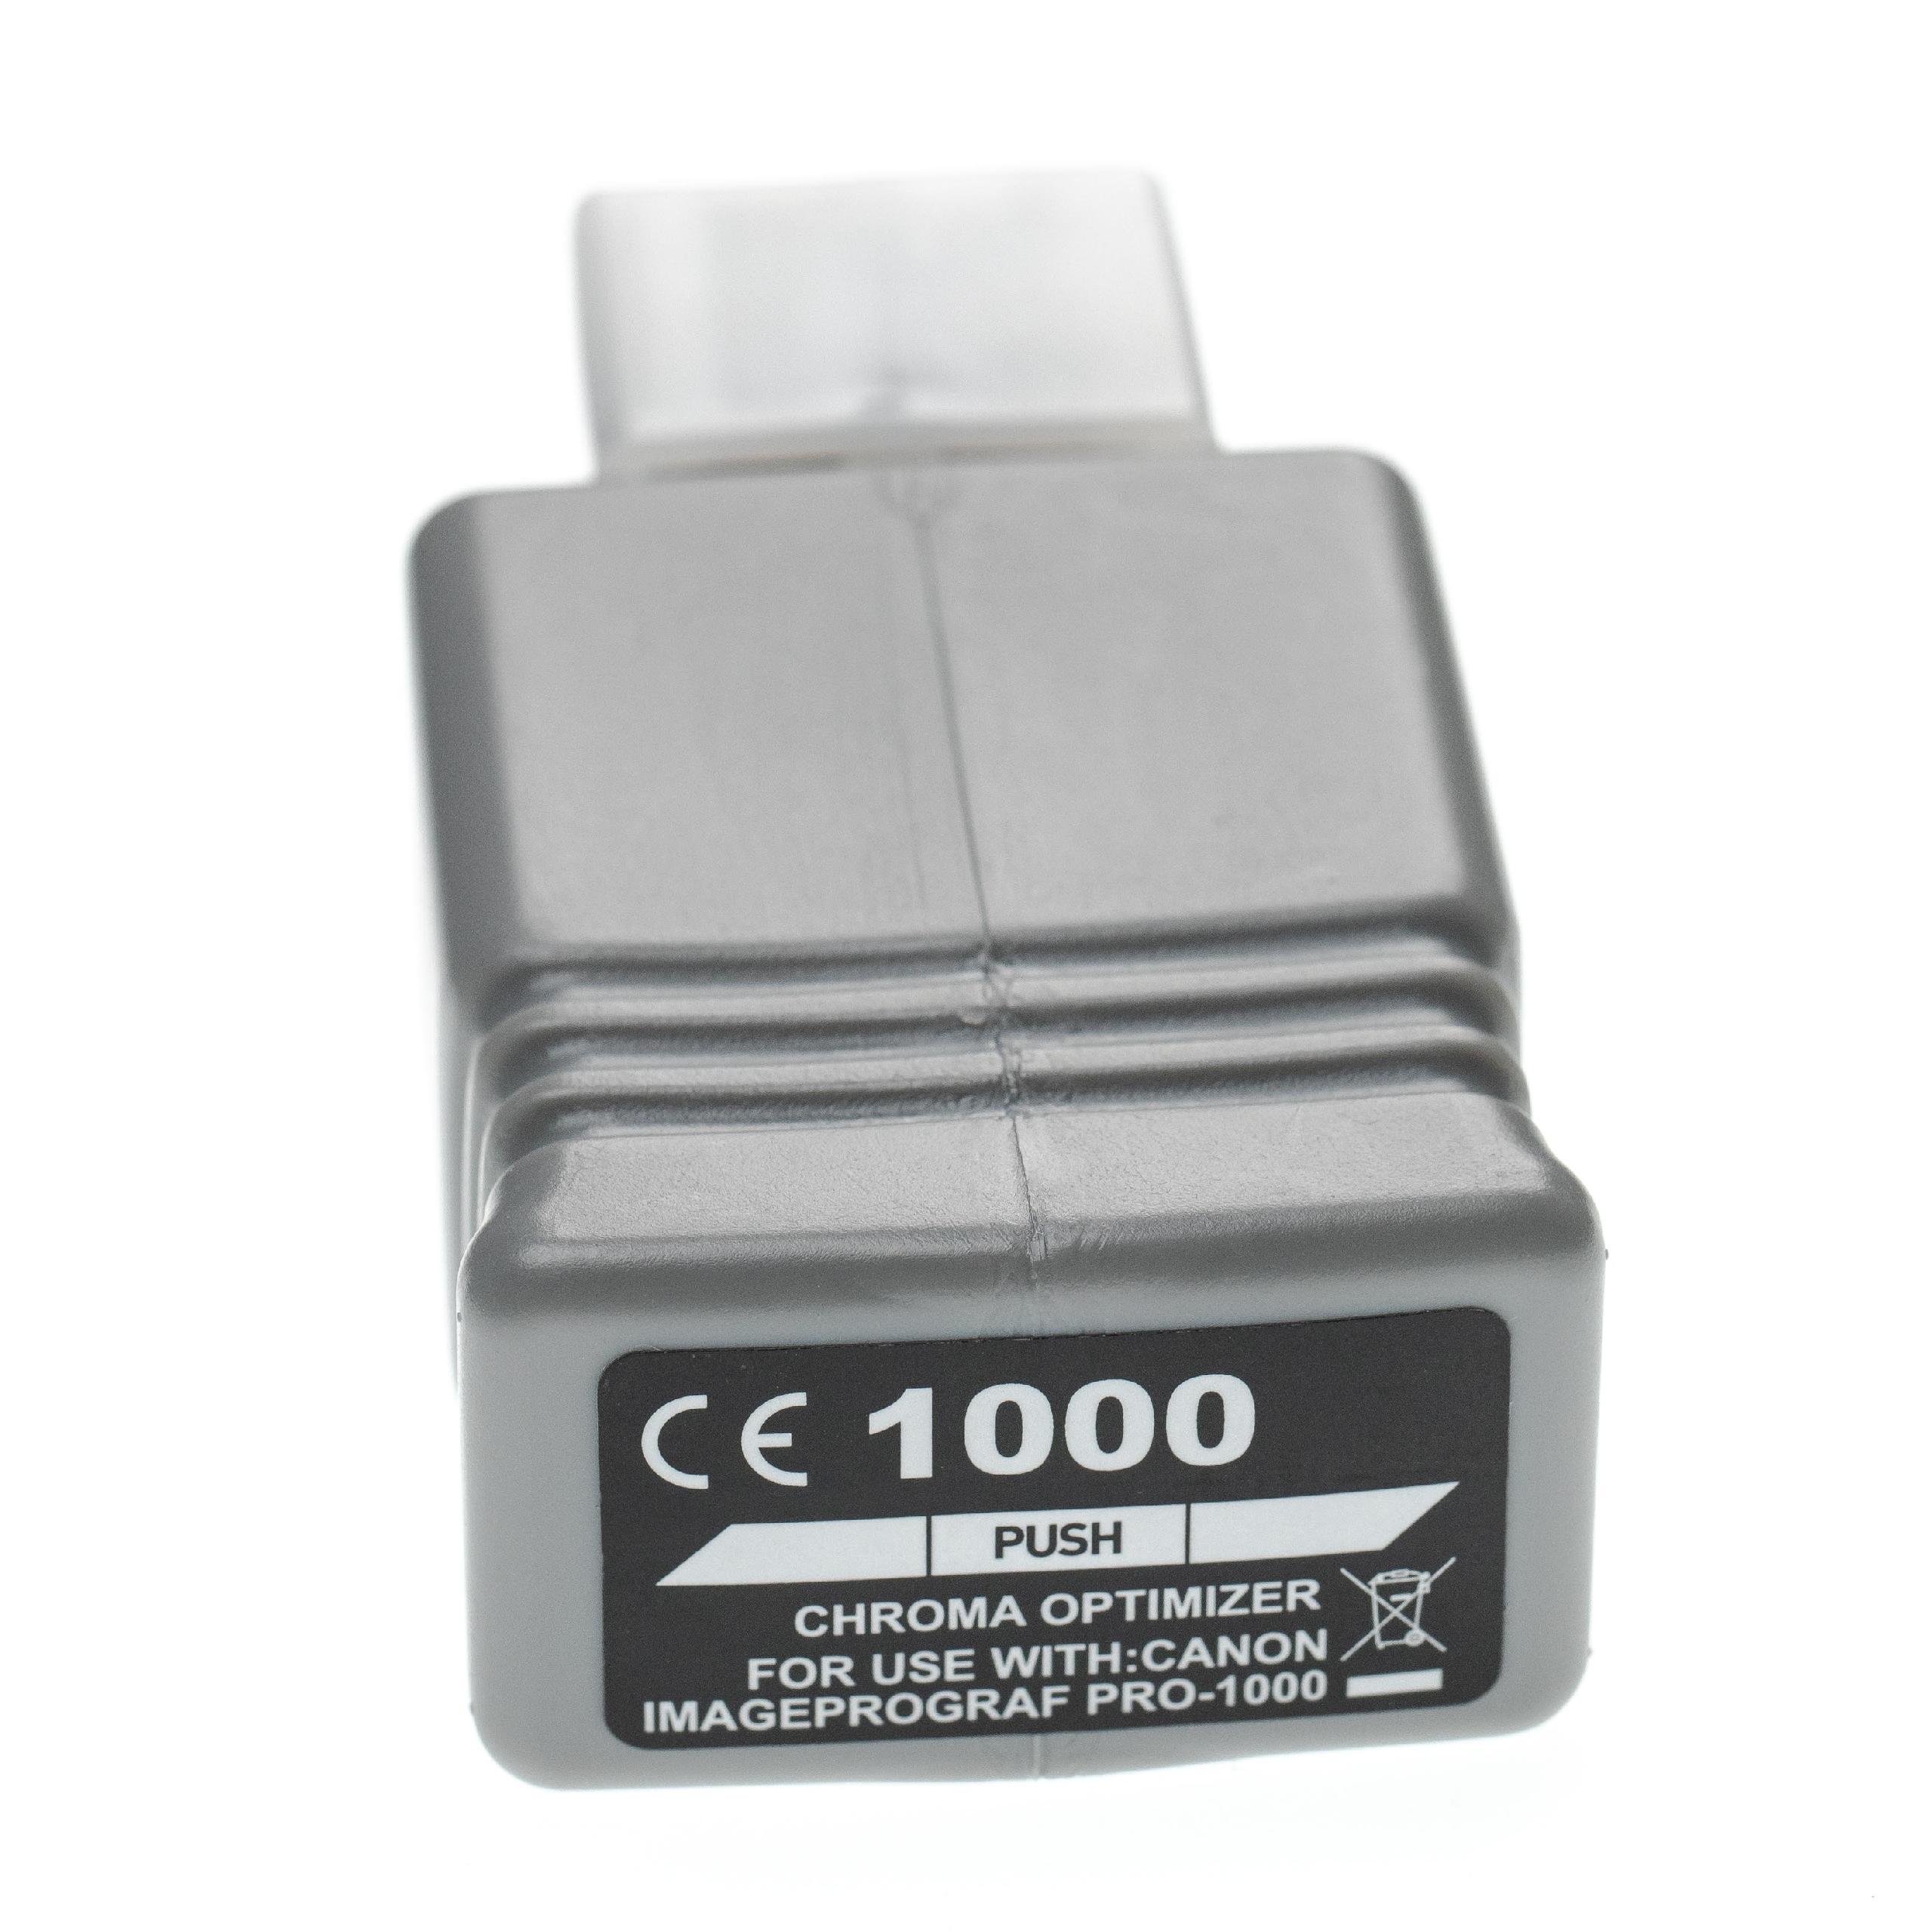 Tintenpatrone passend für Canon Imageprograf PRO-1000 Drucker - Chroma Optimizer 80ml + Chip